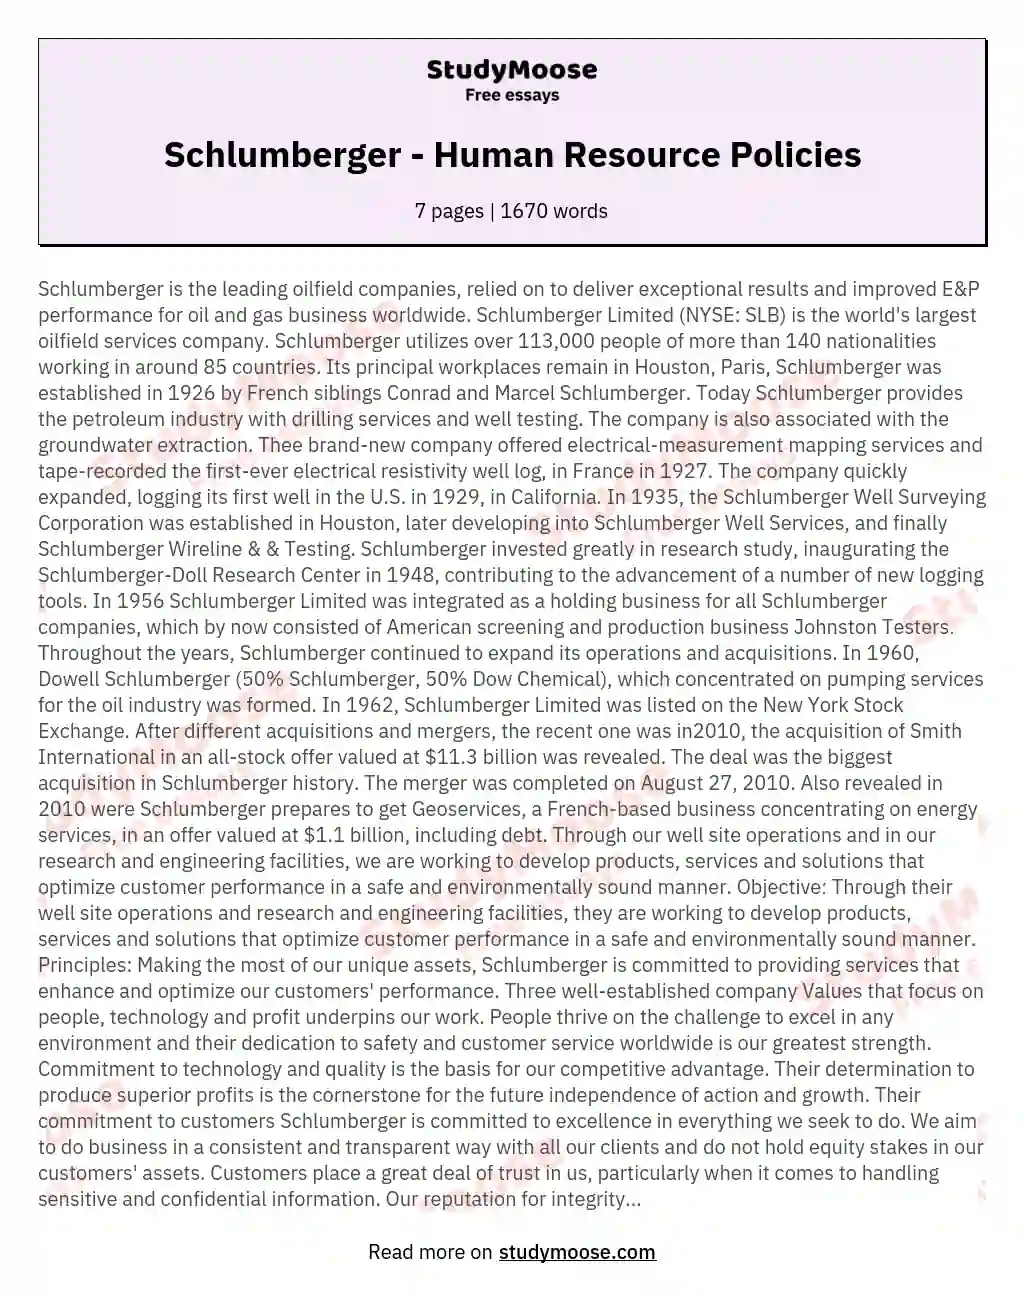 Schlumberger - Human Resource Policies essay